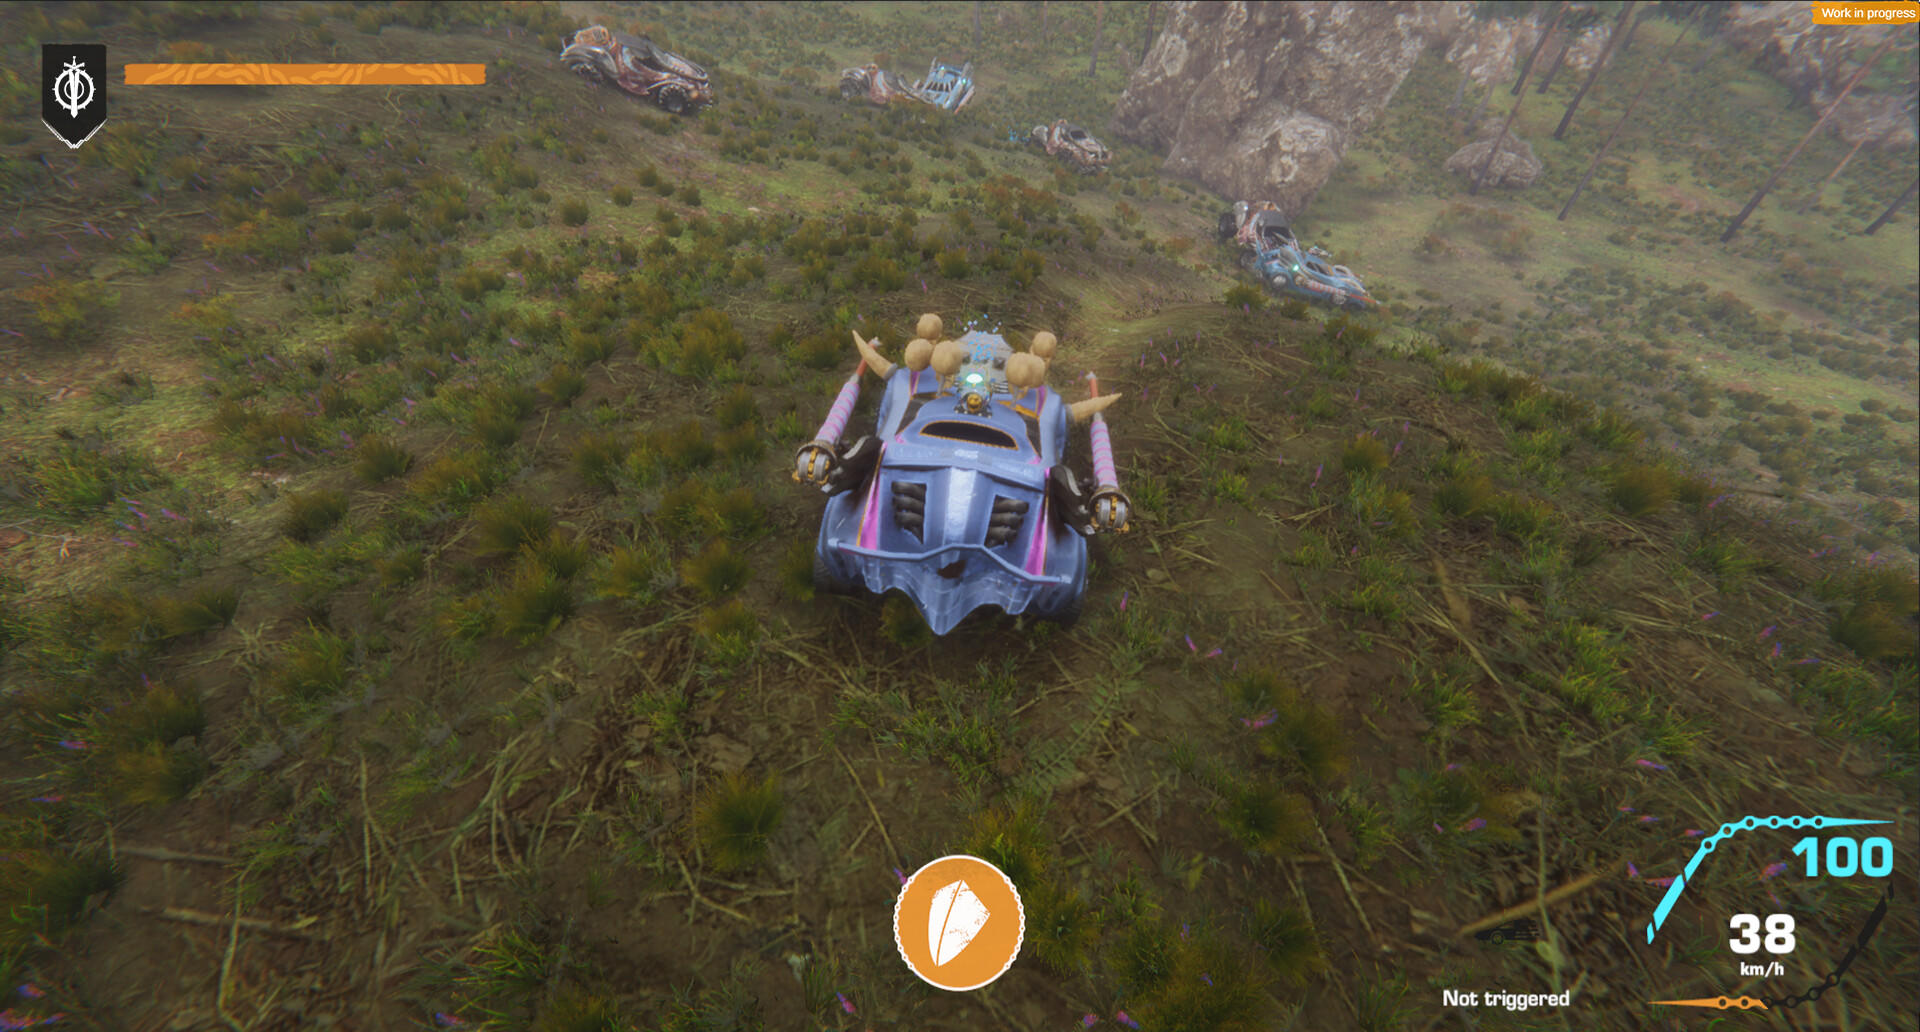 War of Wheels screenshot game